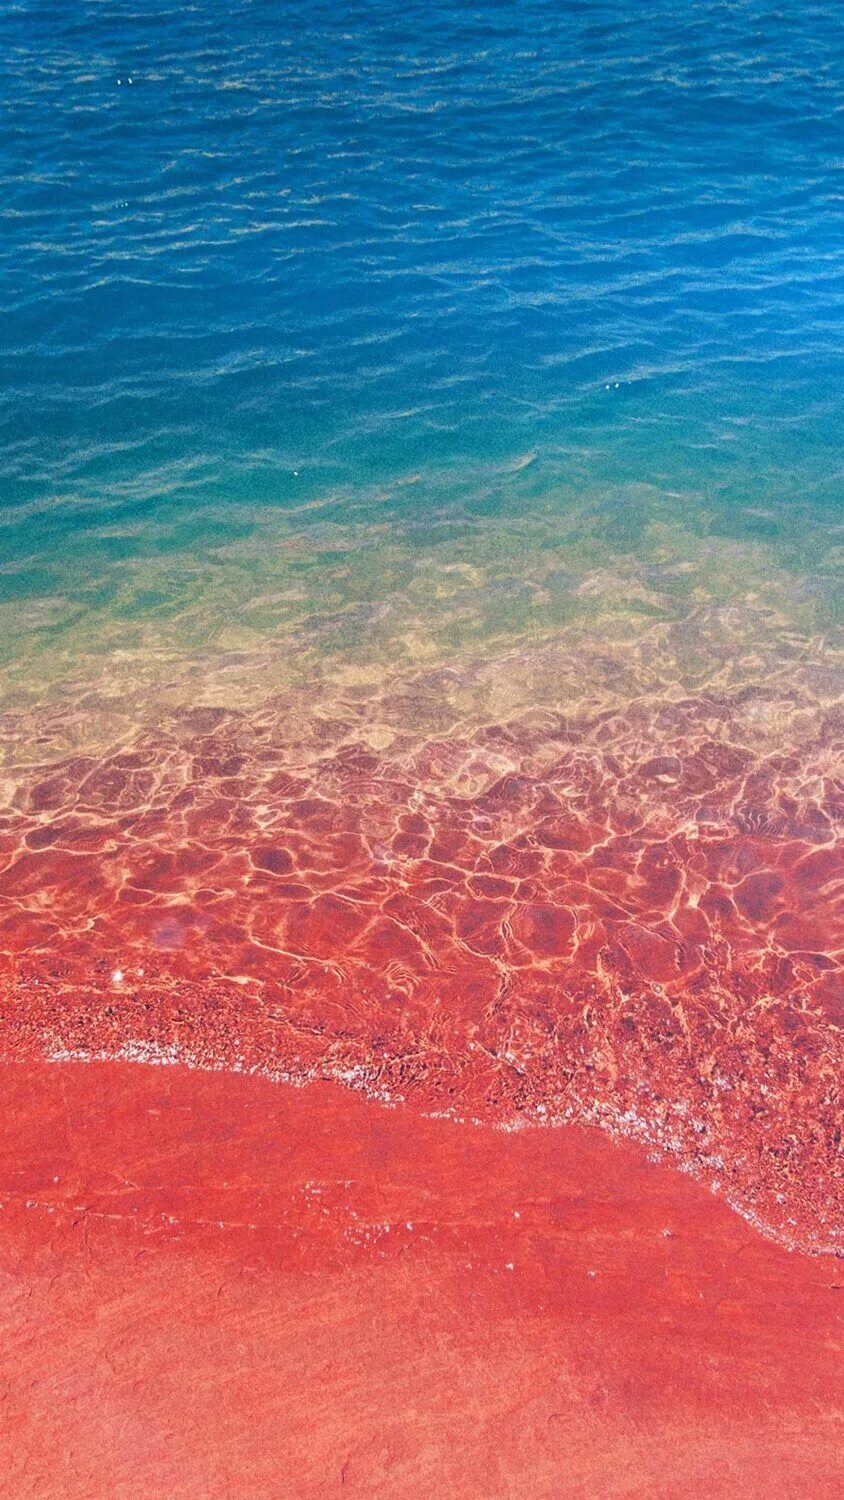 Летние обои на айфон. Айфон IOS 11. Розовое море. Розовое лето. Море с розовым песком.